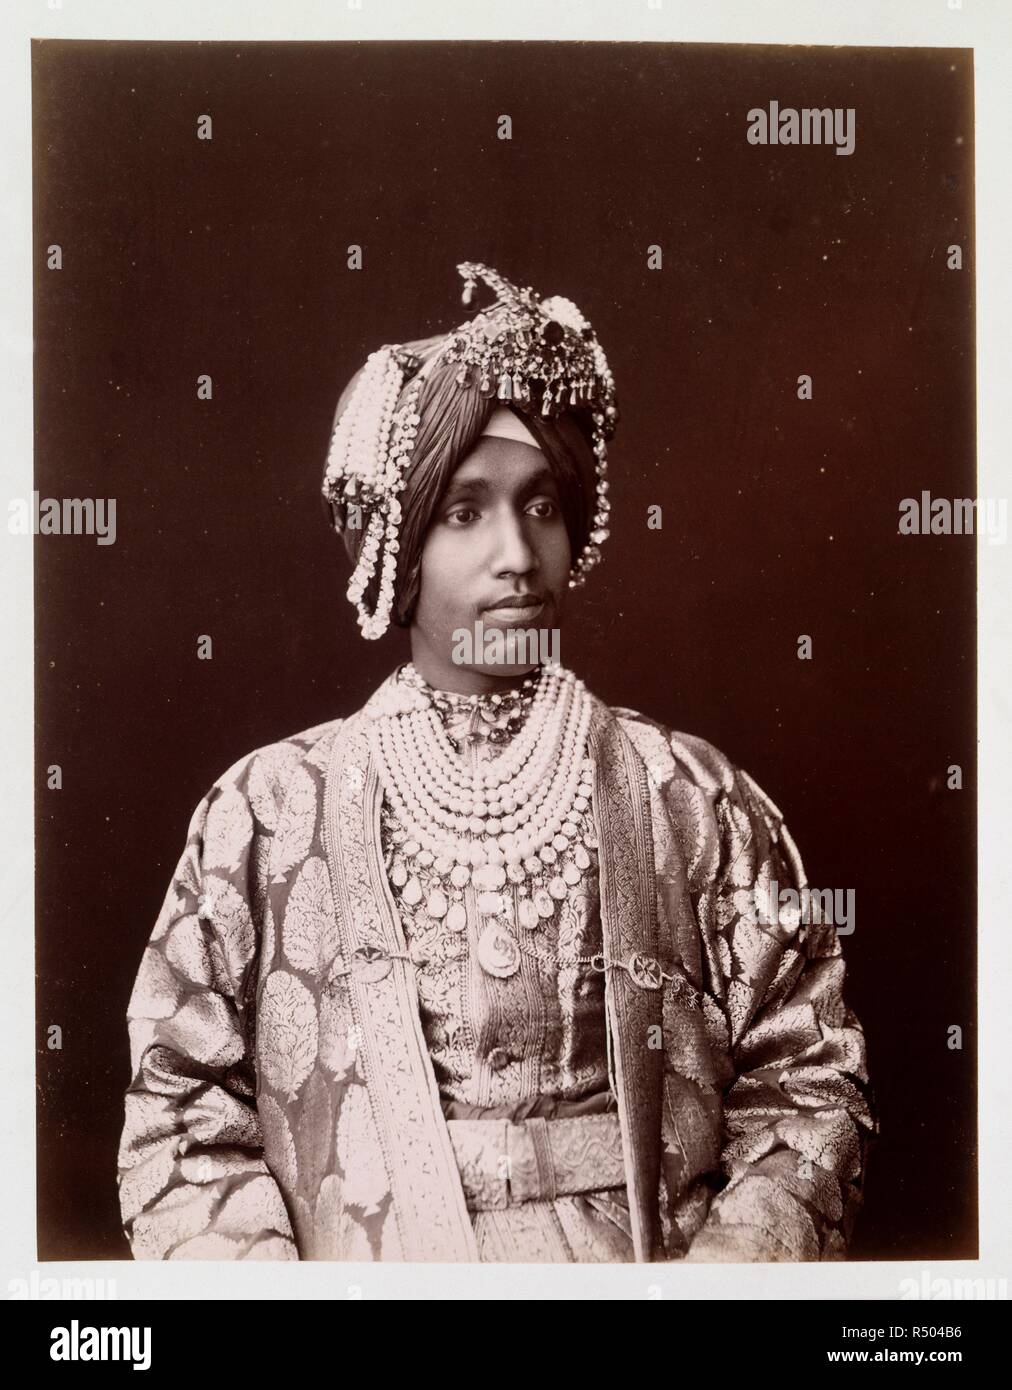 Maharaja of patiala hi-res stock photography and images - Alamy